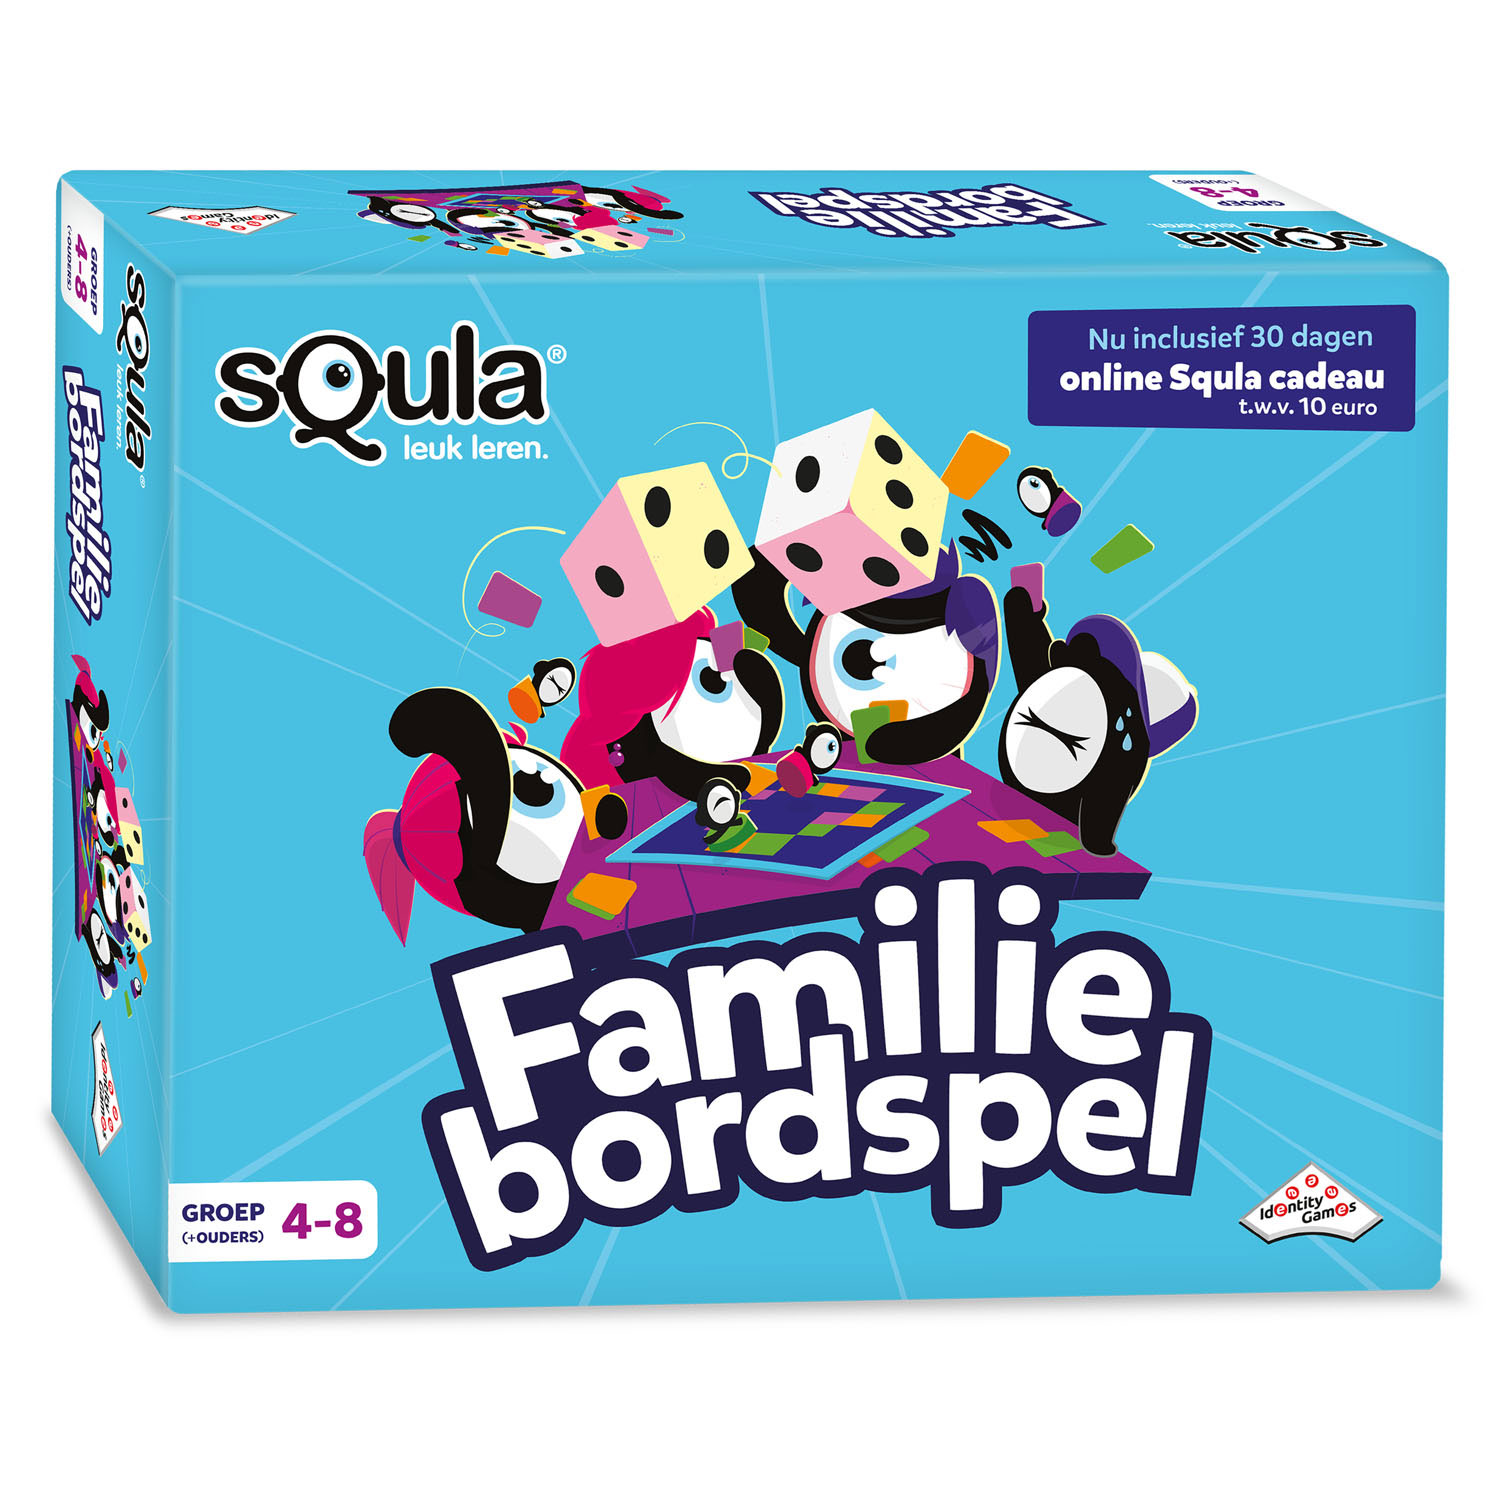 Squla Familie Bordspel online | Lobbes Speelgoed